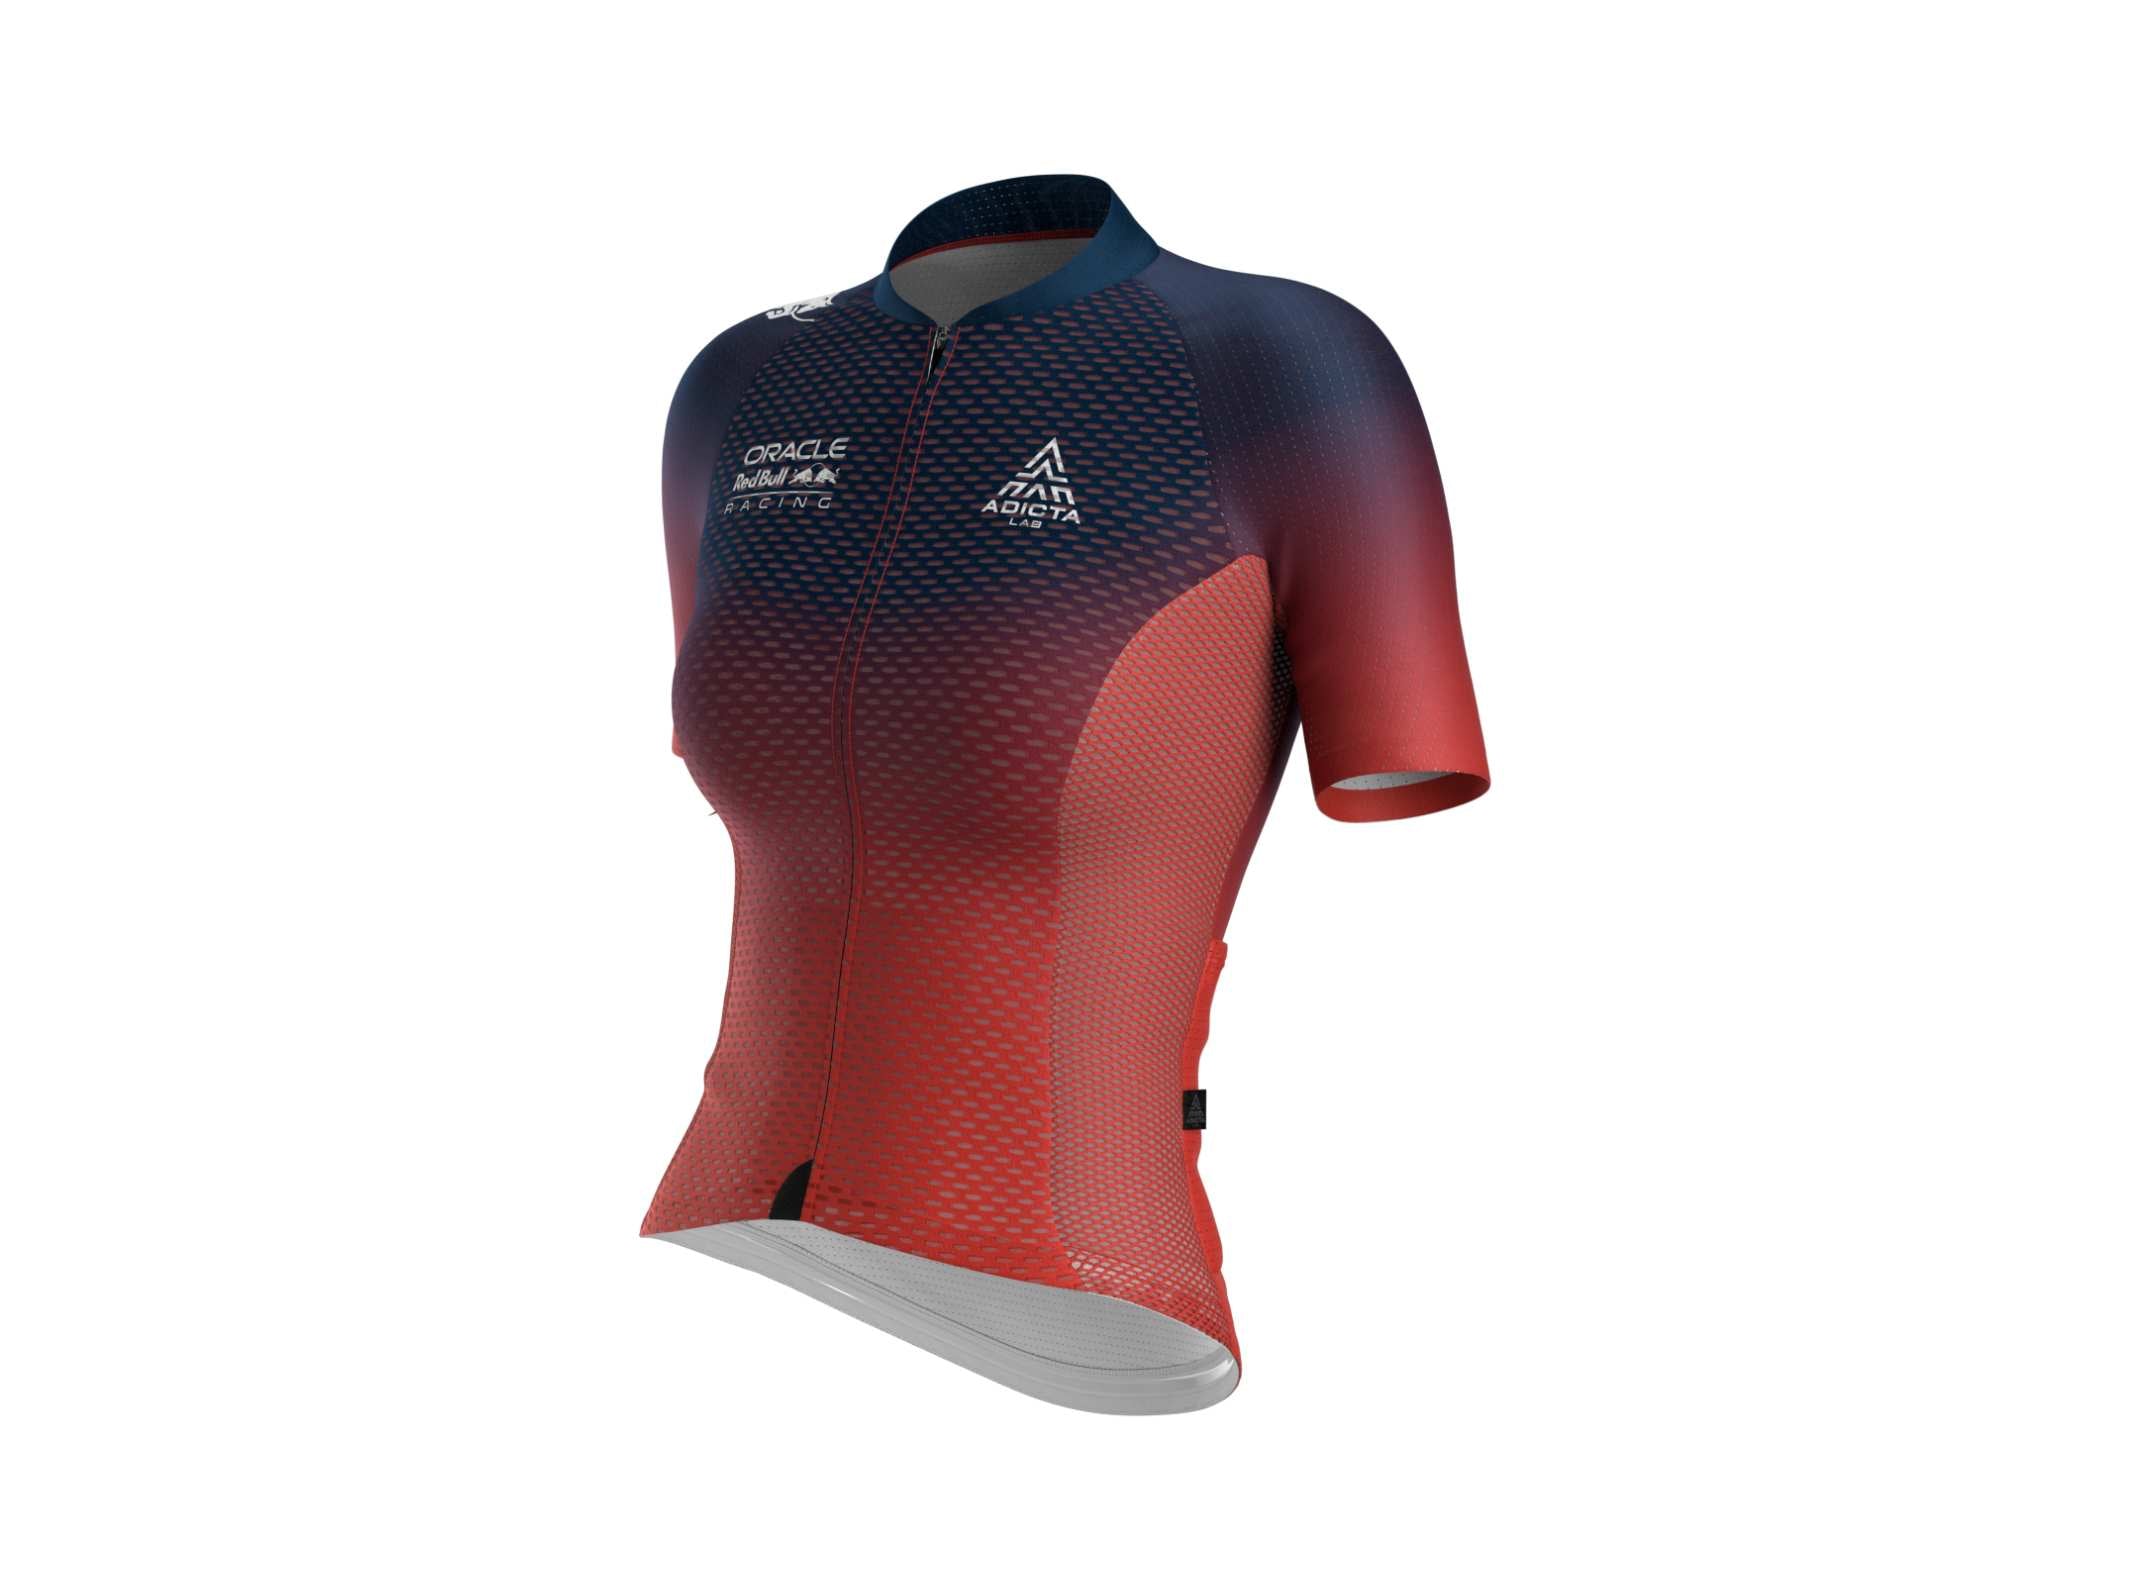 VALENT WMN Jersey S/S | ADICTA LAB | apparel | Apparel, Apparel | Cycling Jerseys